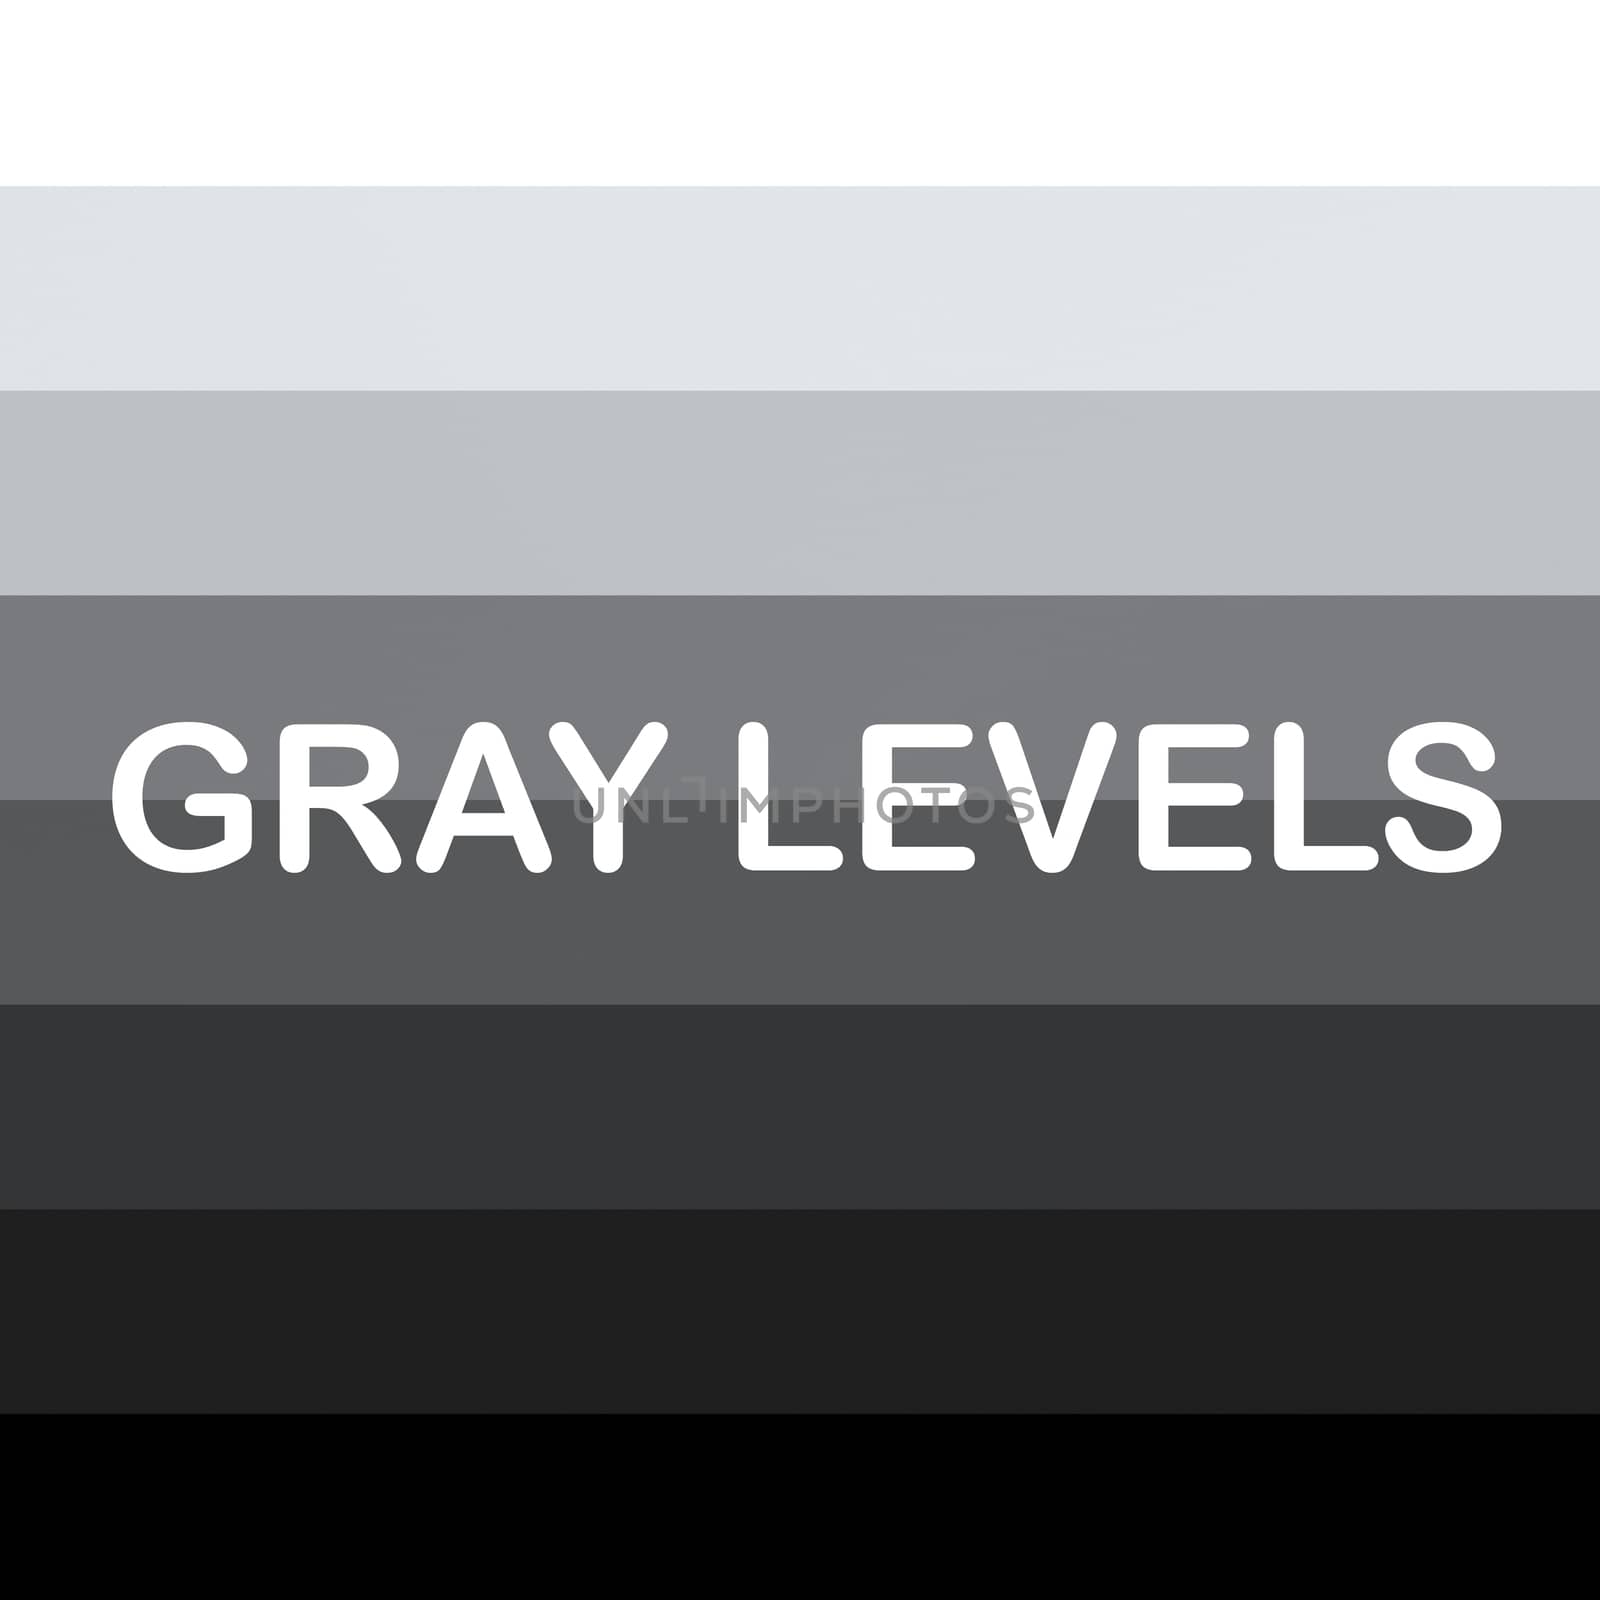 GRAY LEVELS concept by HD_premium_shots